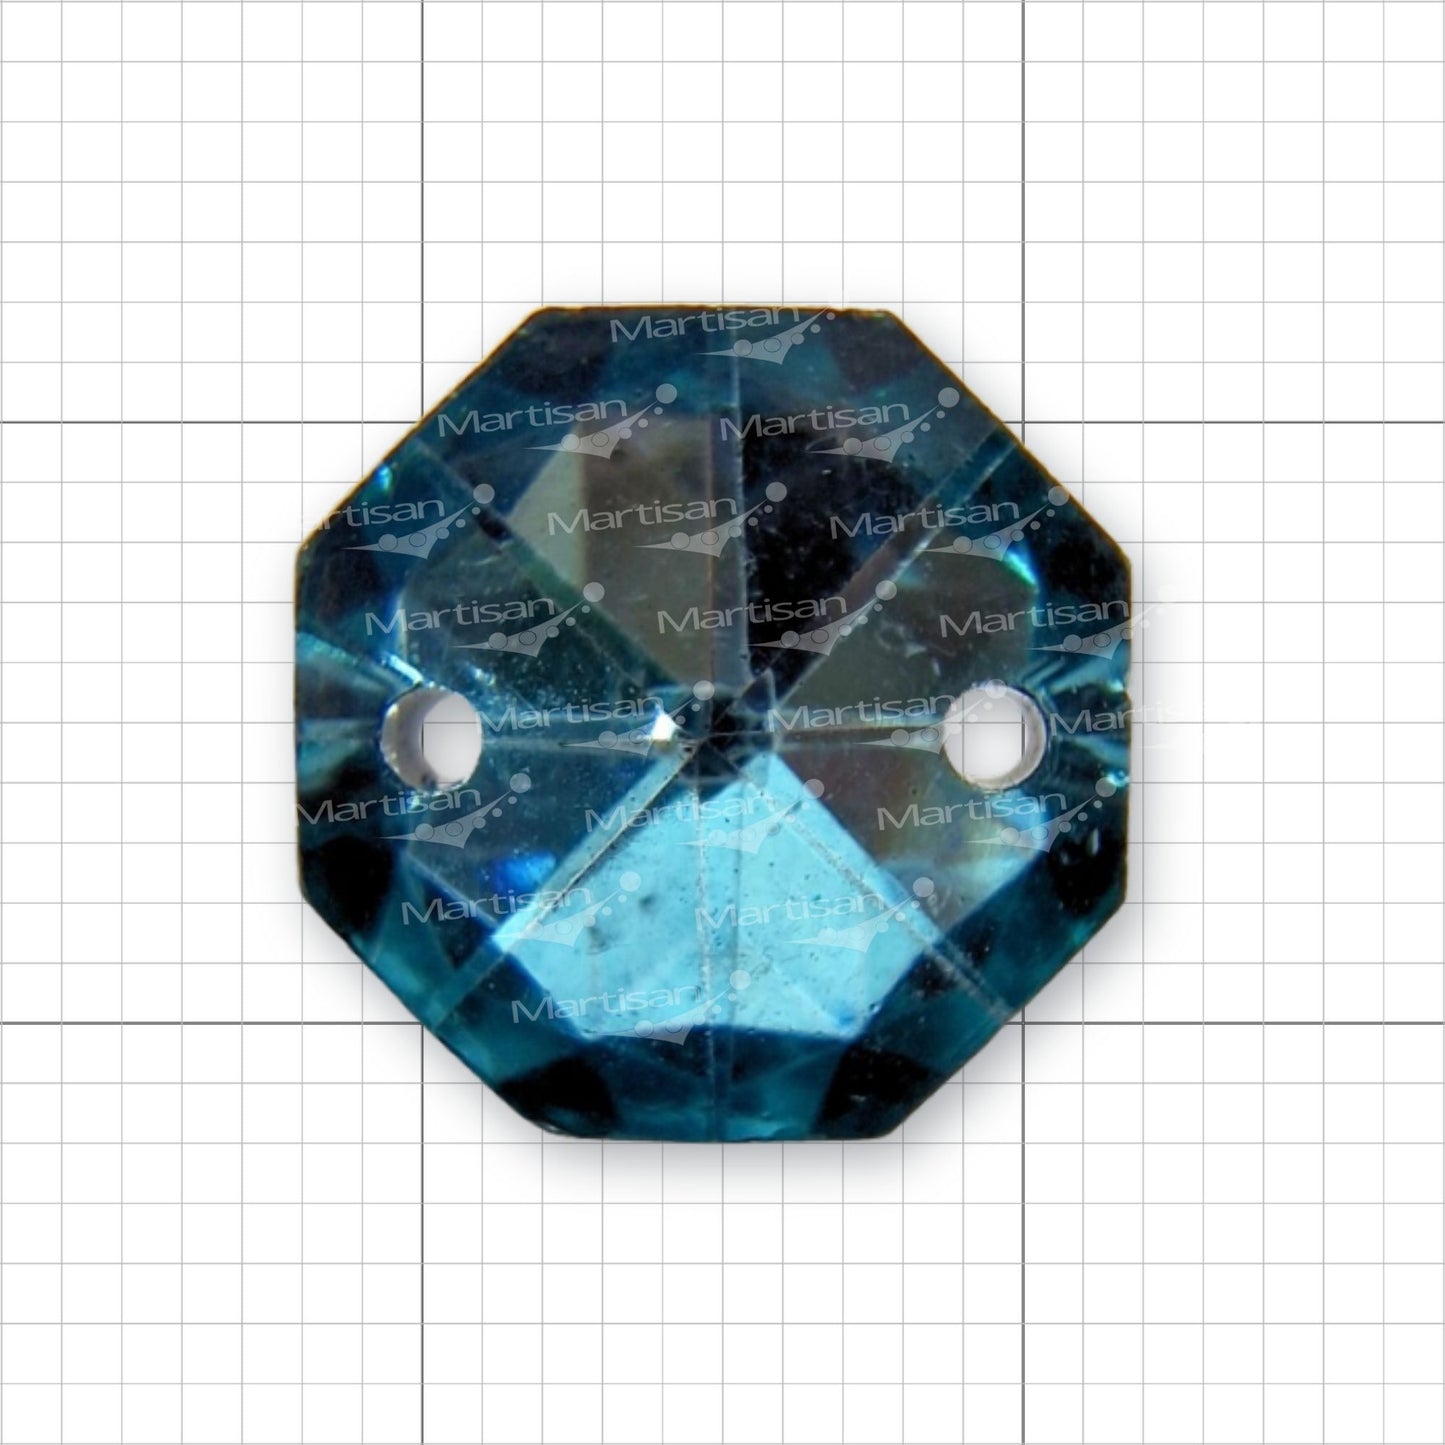 Cristal Octagonal 14mm